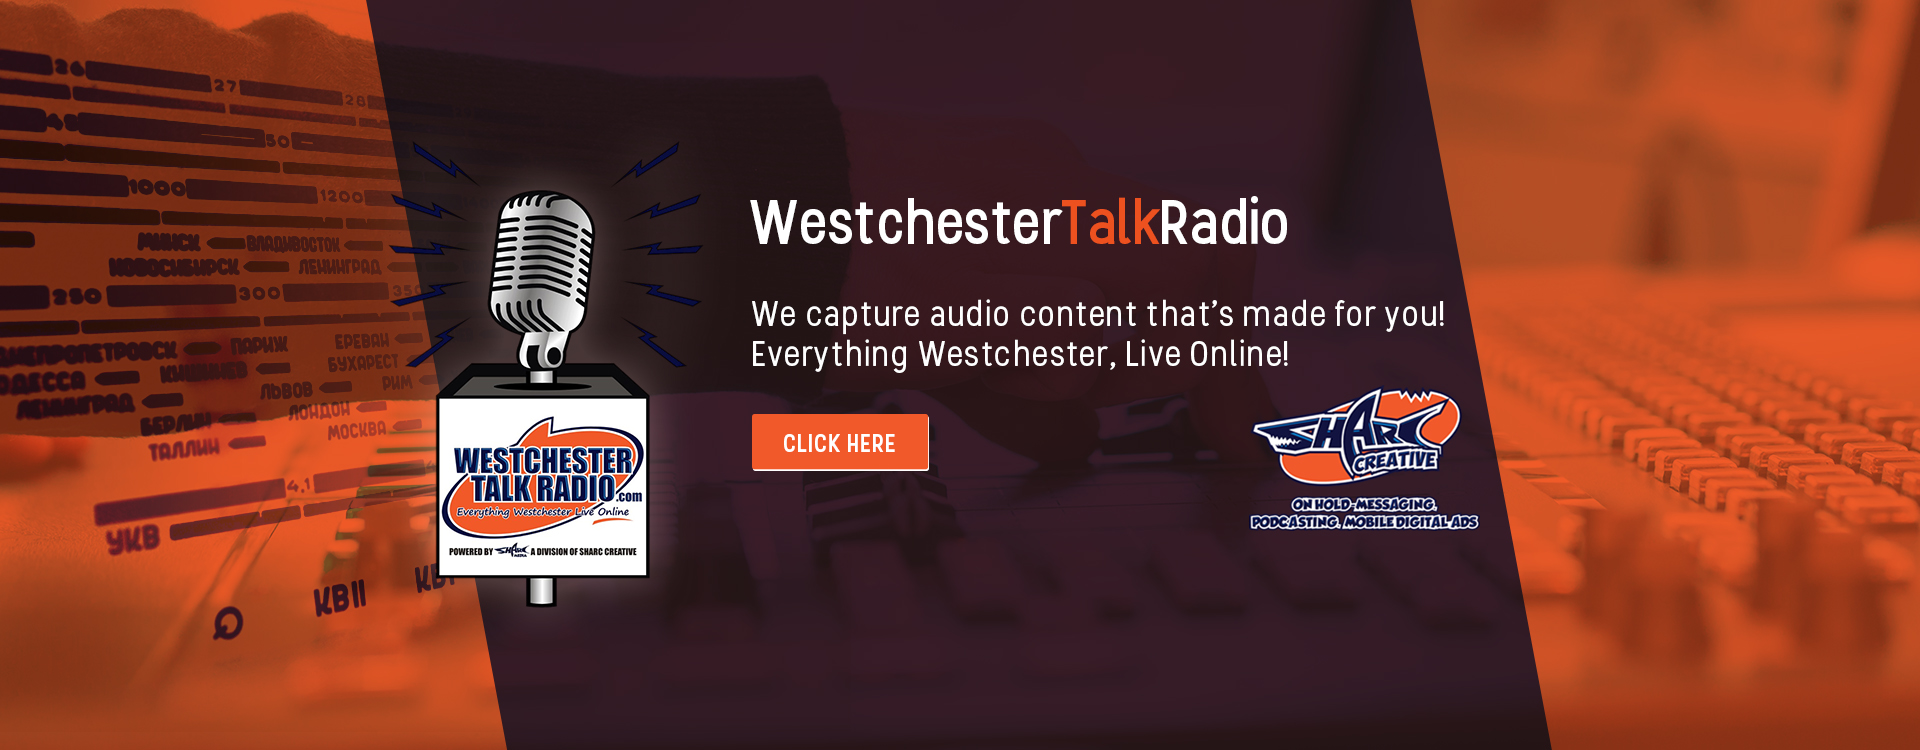 WestchesterTalkRadio